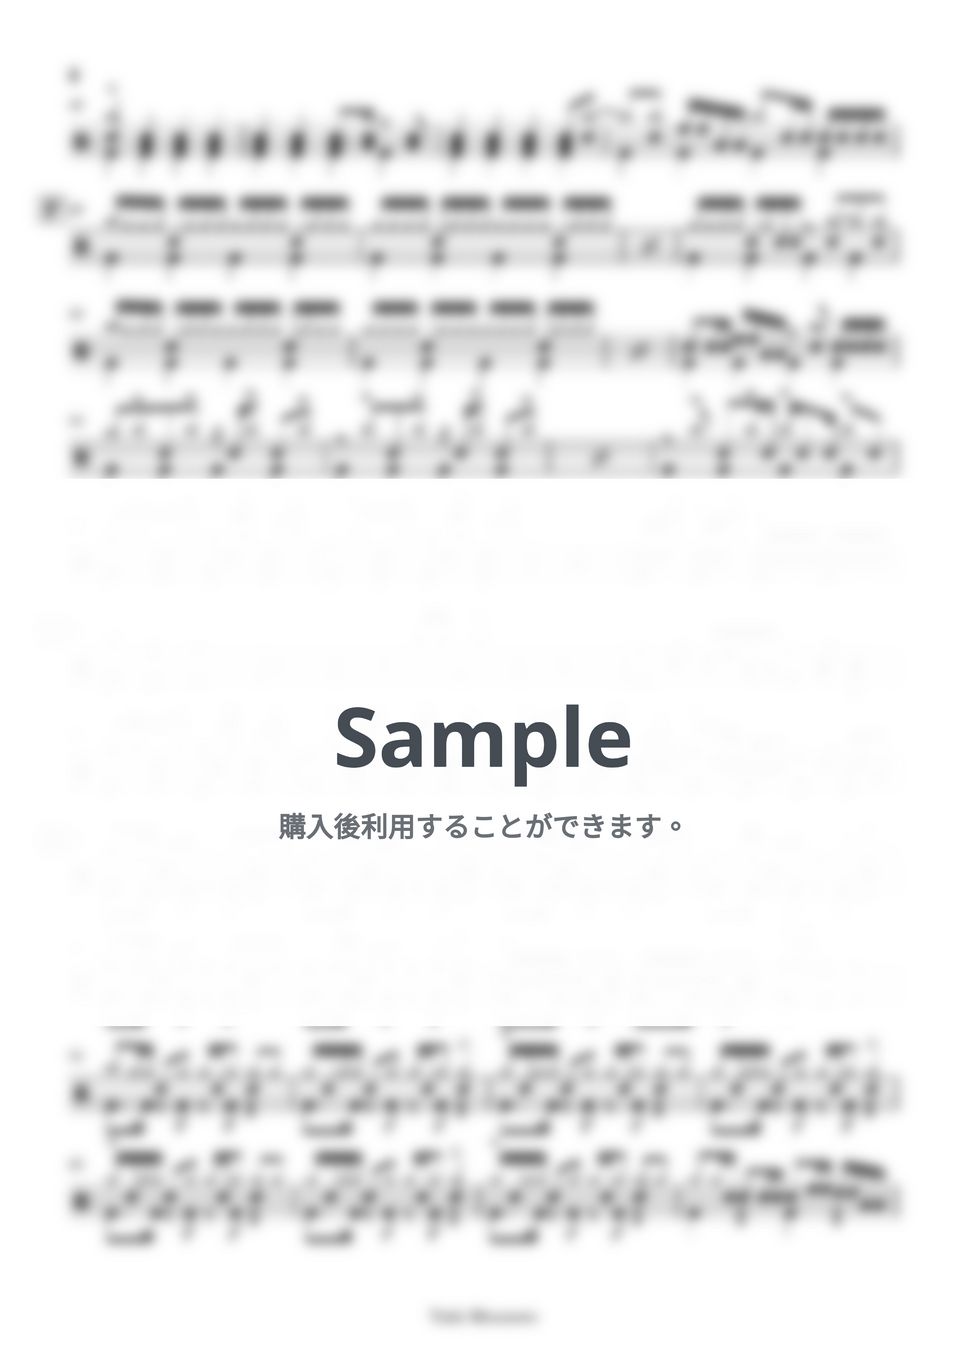 Ado - 【ドラム譜】ブリキノダンス【アレンジ】 (演奏動画あり) by Taiki Mizumoto